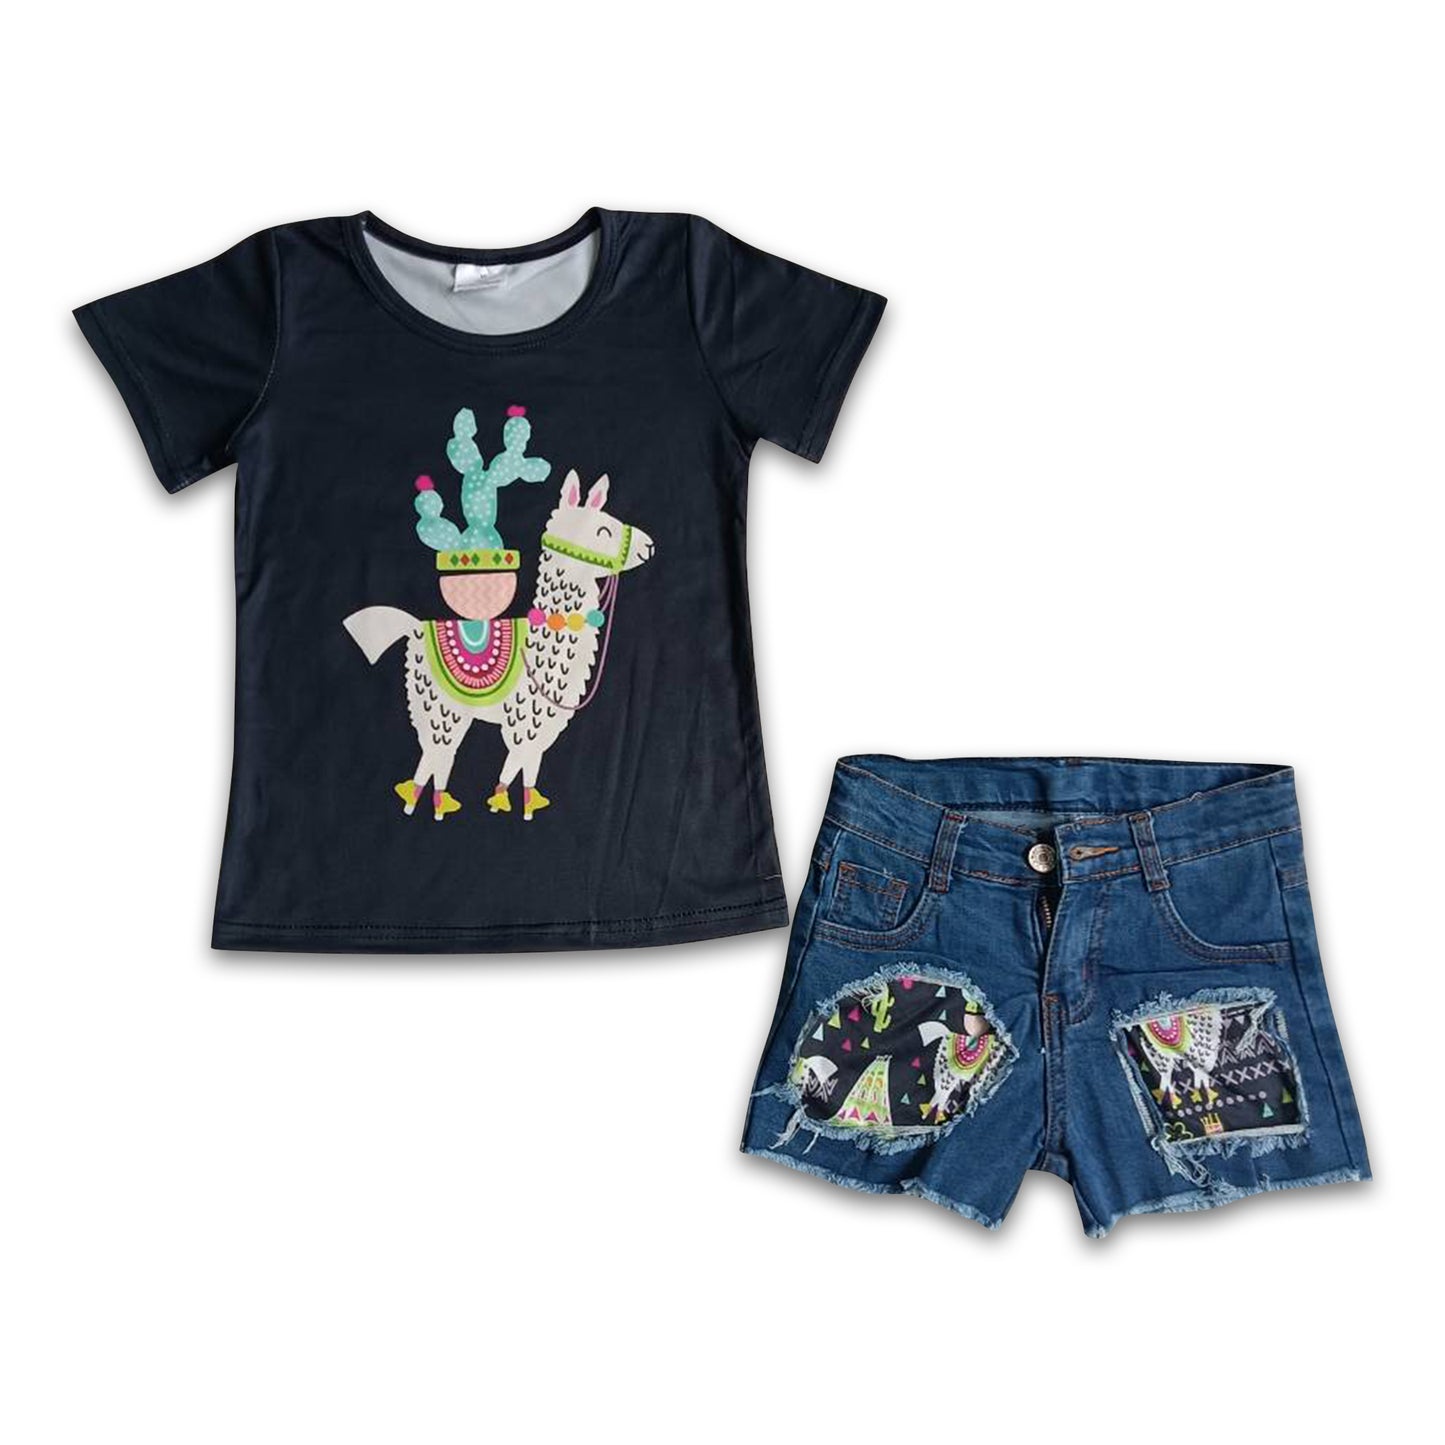 Llama print shirt match denim shorts girls clothing